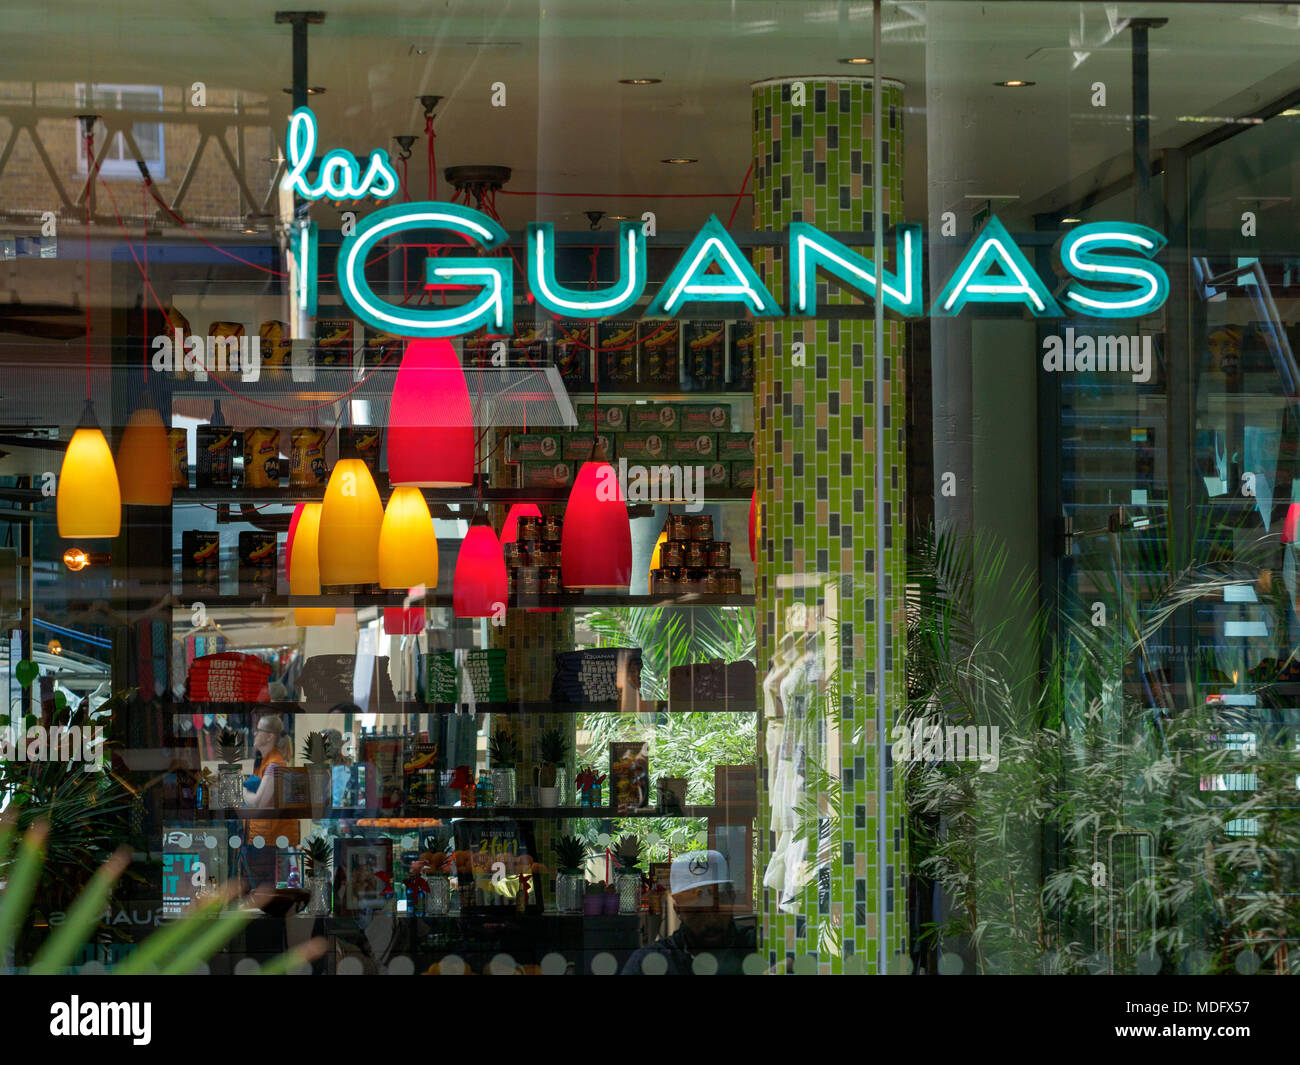 Las Iguanas restaurant in Spitalfields Market, Shoreditch, London.  Las Iguanas is a Latin American style food chain restaurant. Stock Photo